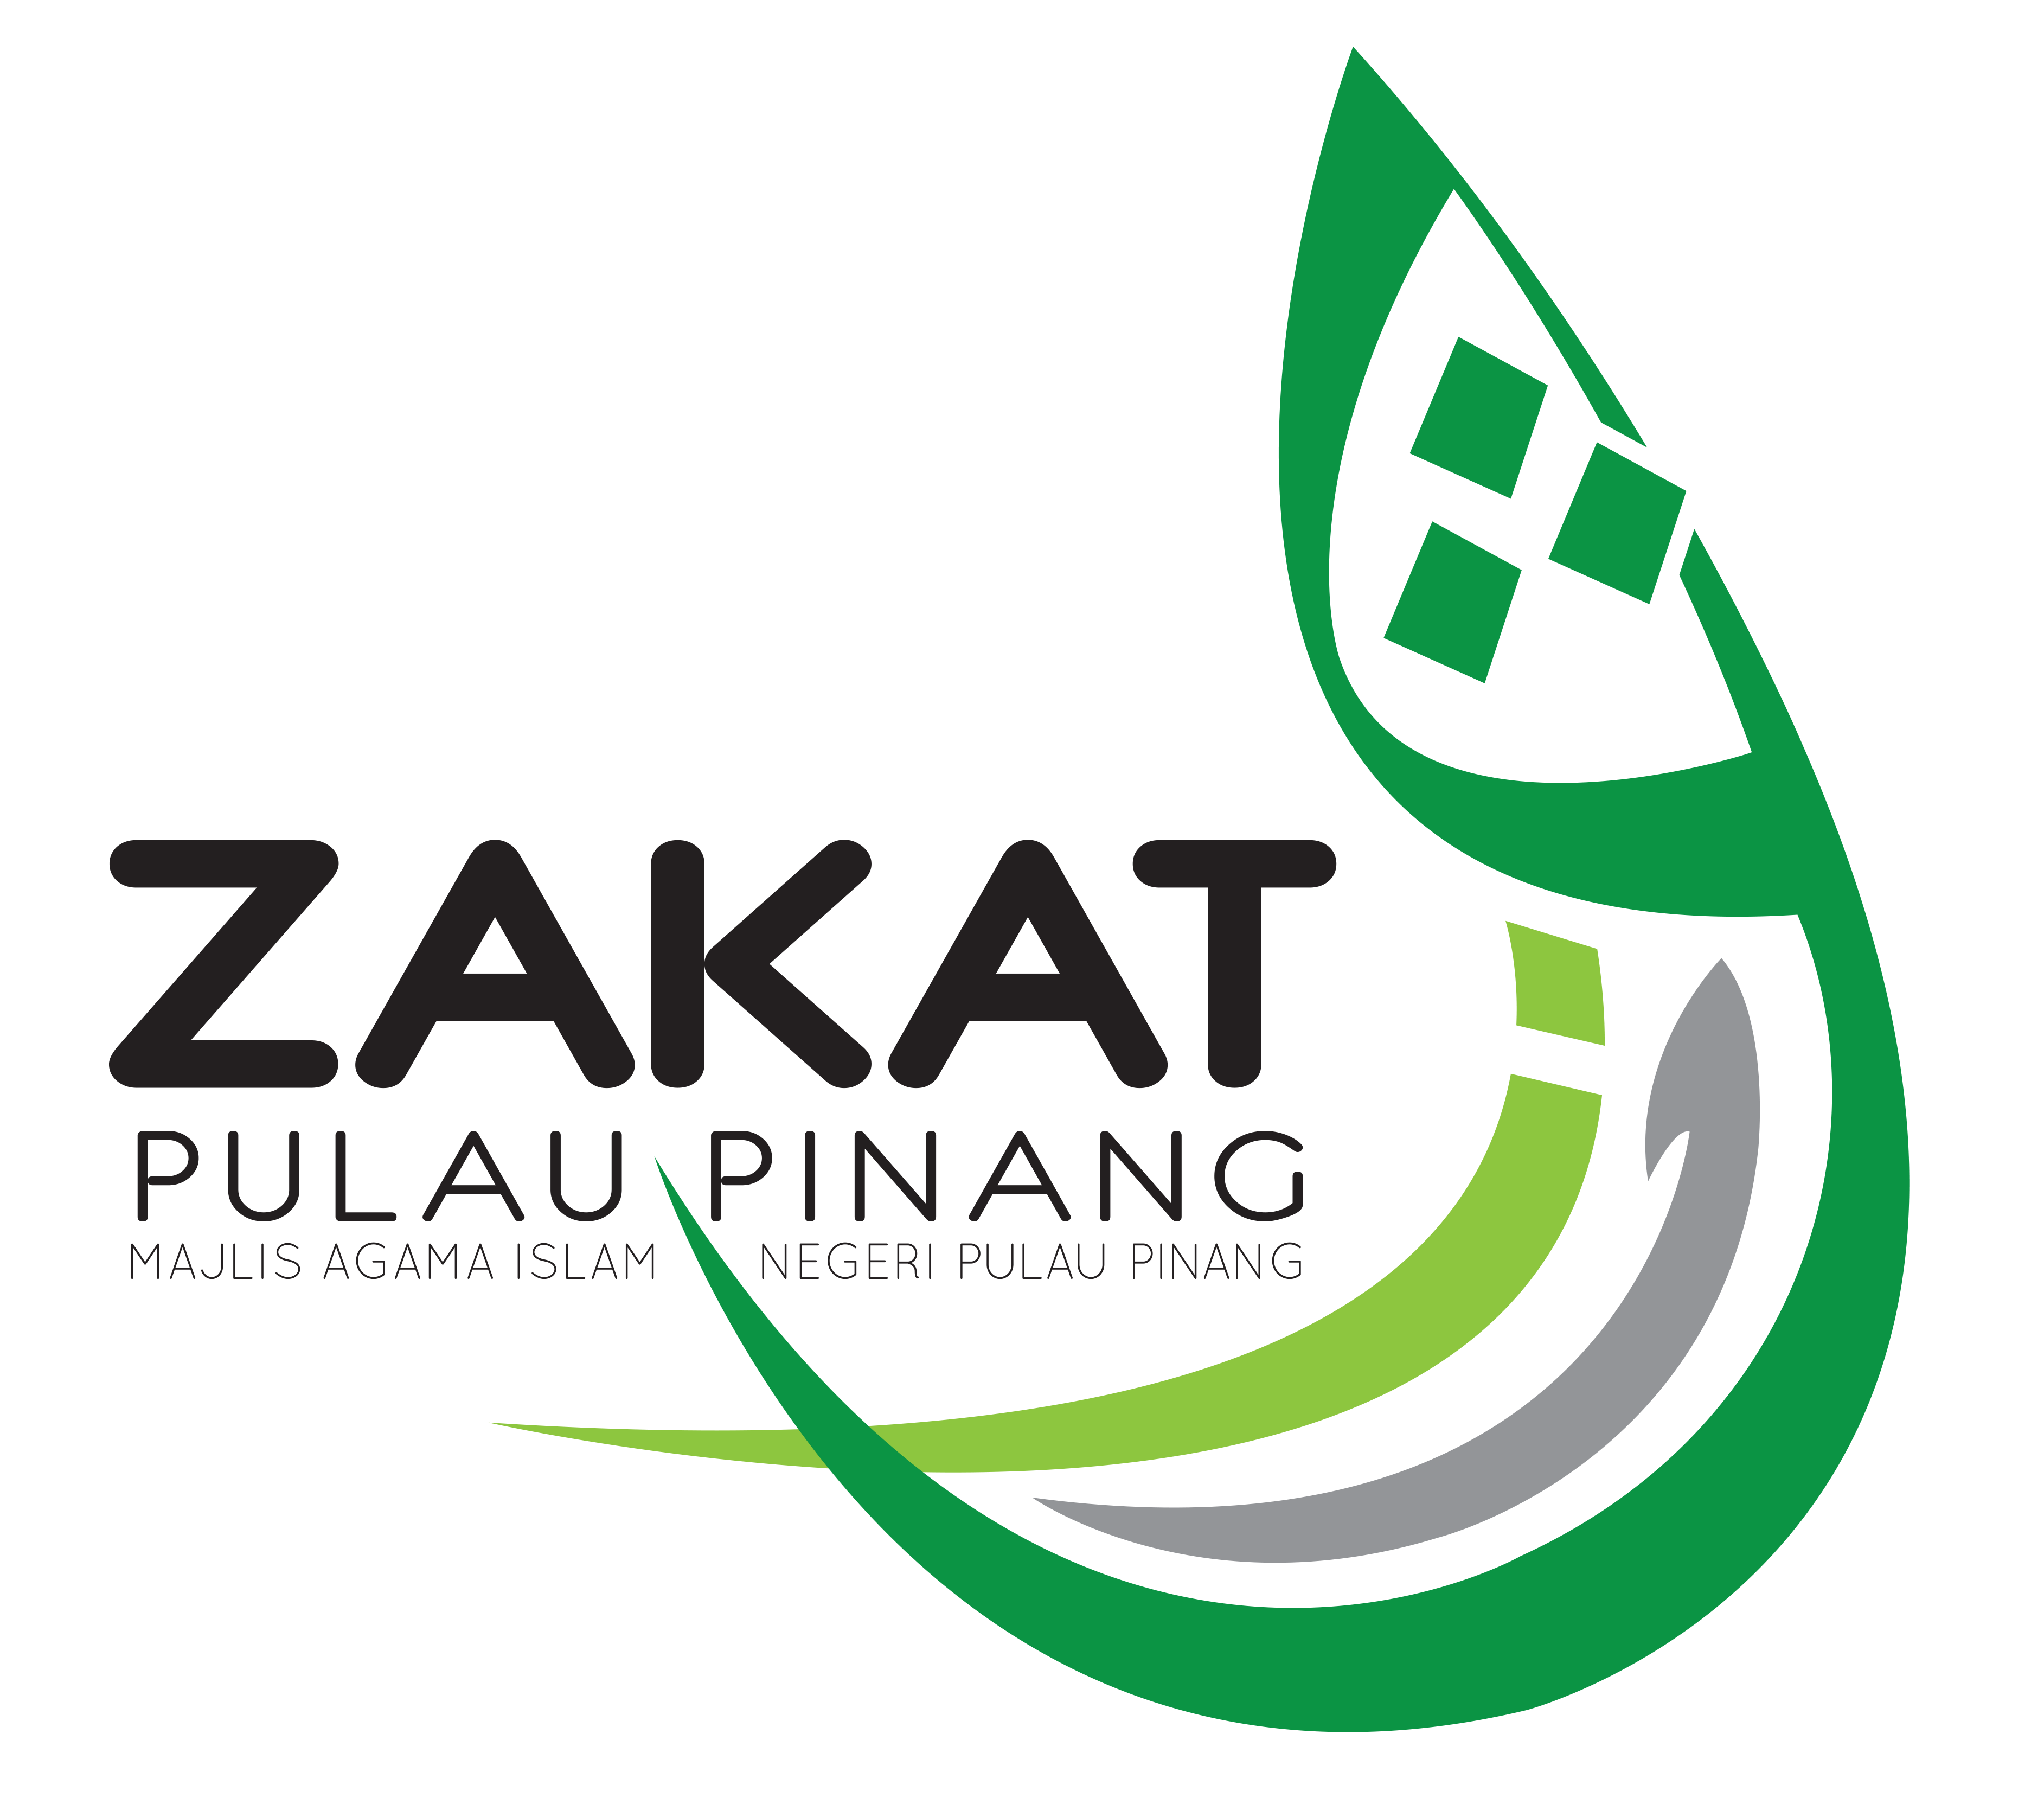 Logo Zakat Pulau Pinang